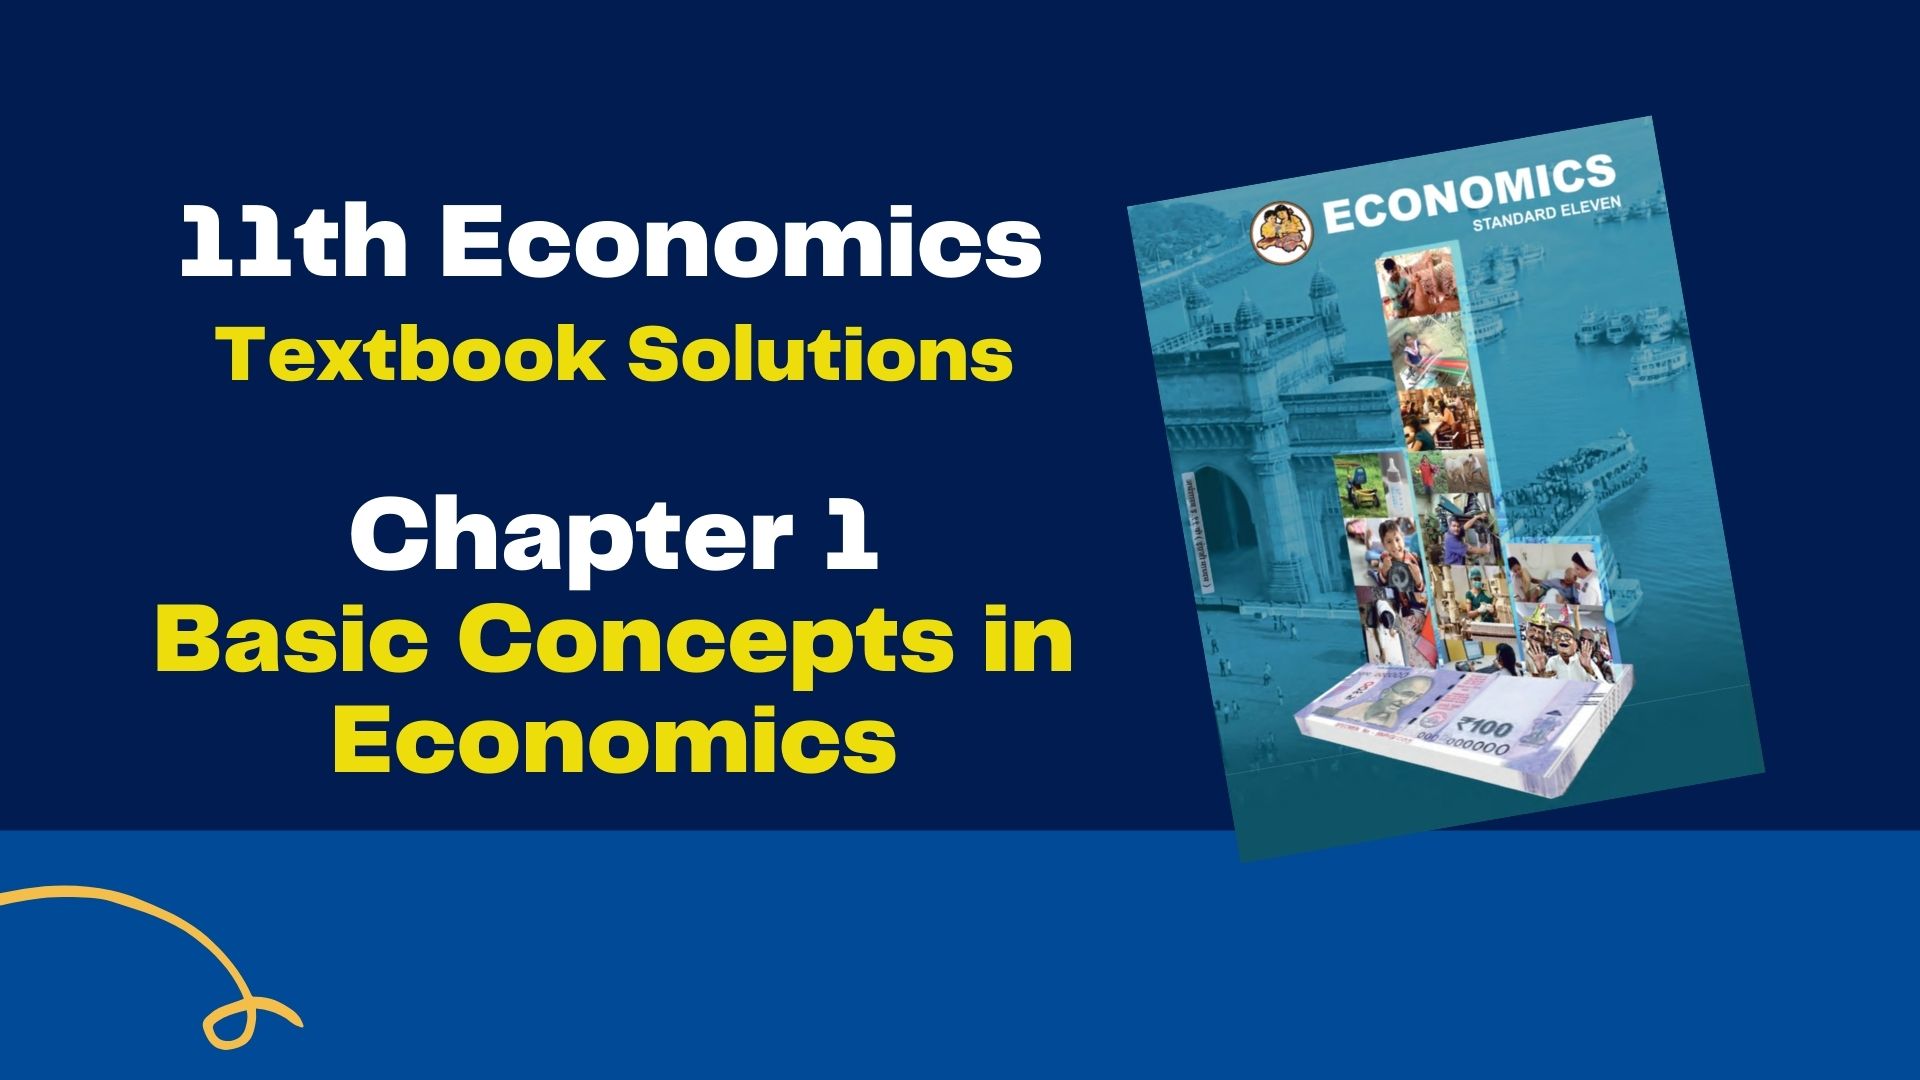 11th Economics Chapter 1 Exercise 